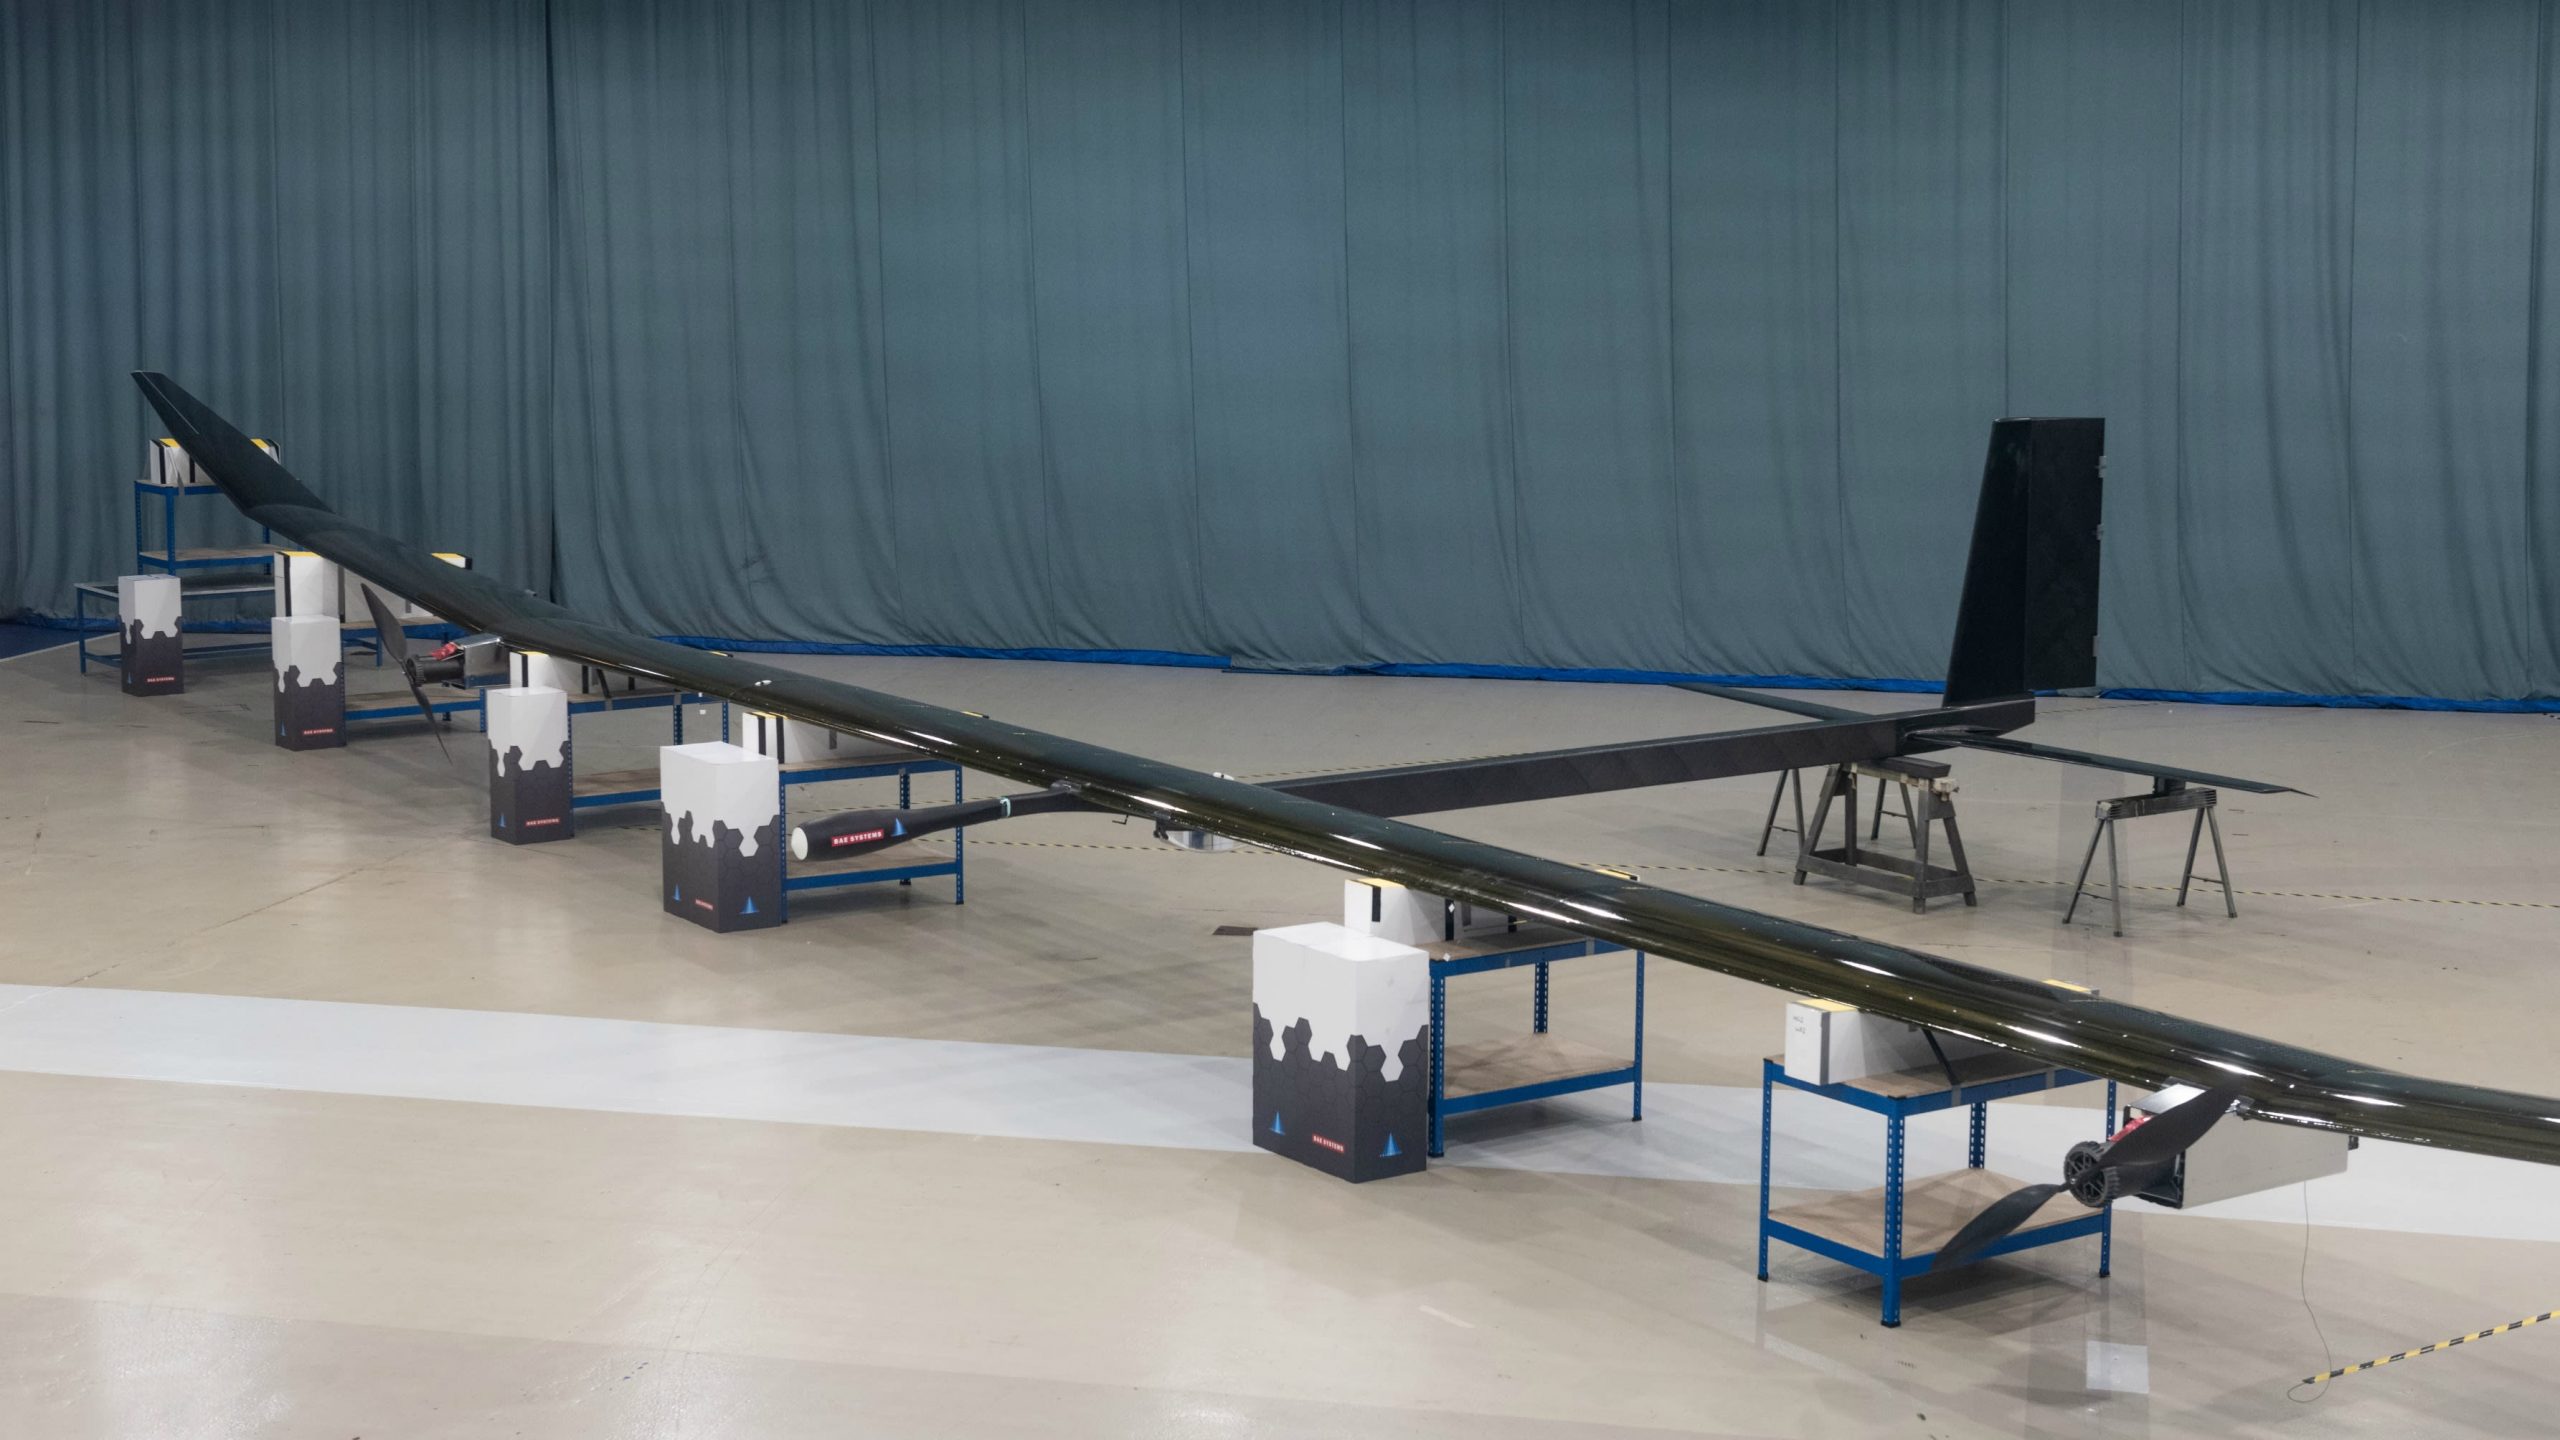 Aeronave solar-elétrica faz primeiro voo de teste